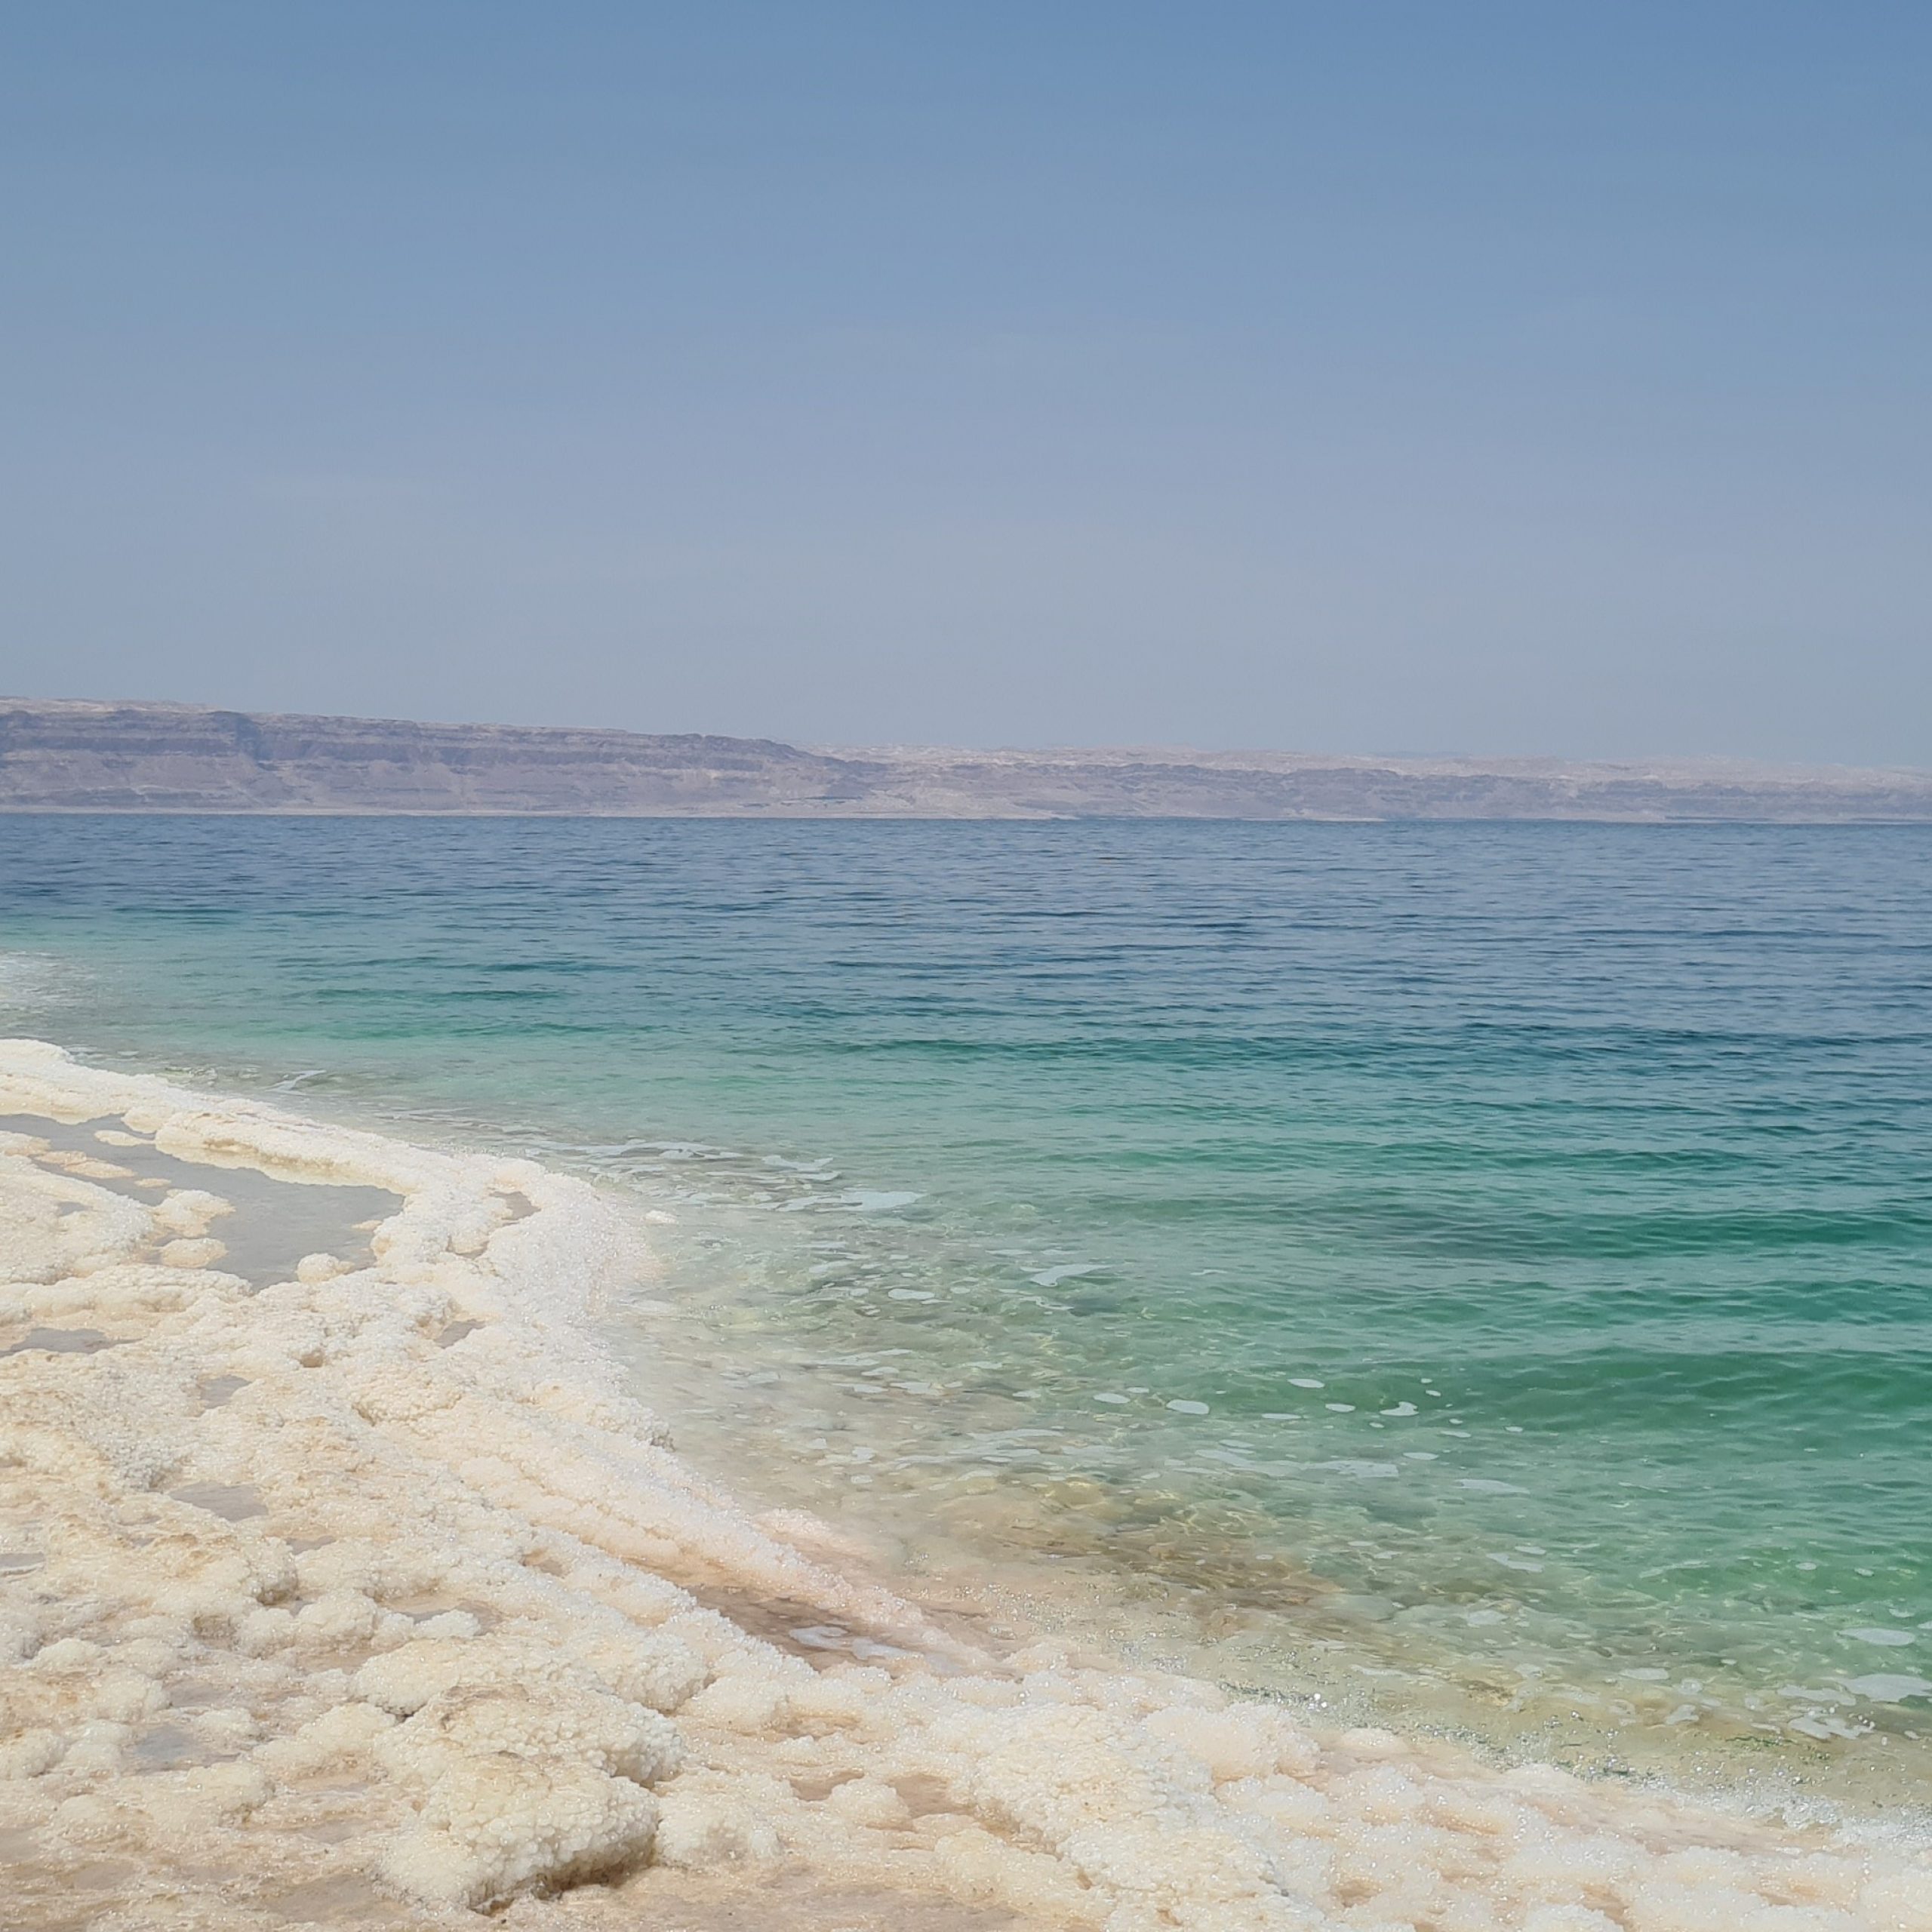 Day 5: Wadi Rum - Dead Sea Experience - Amman